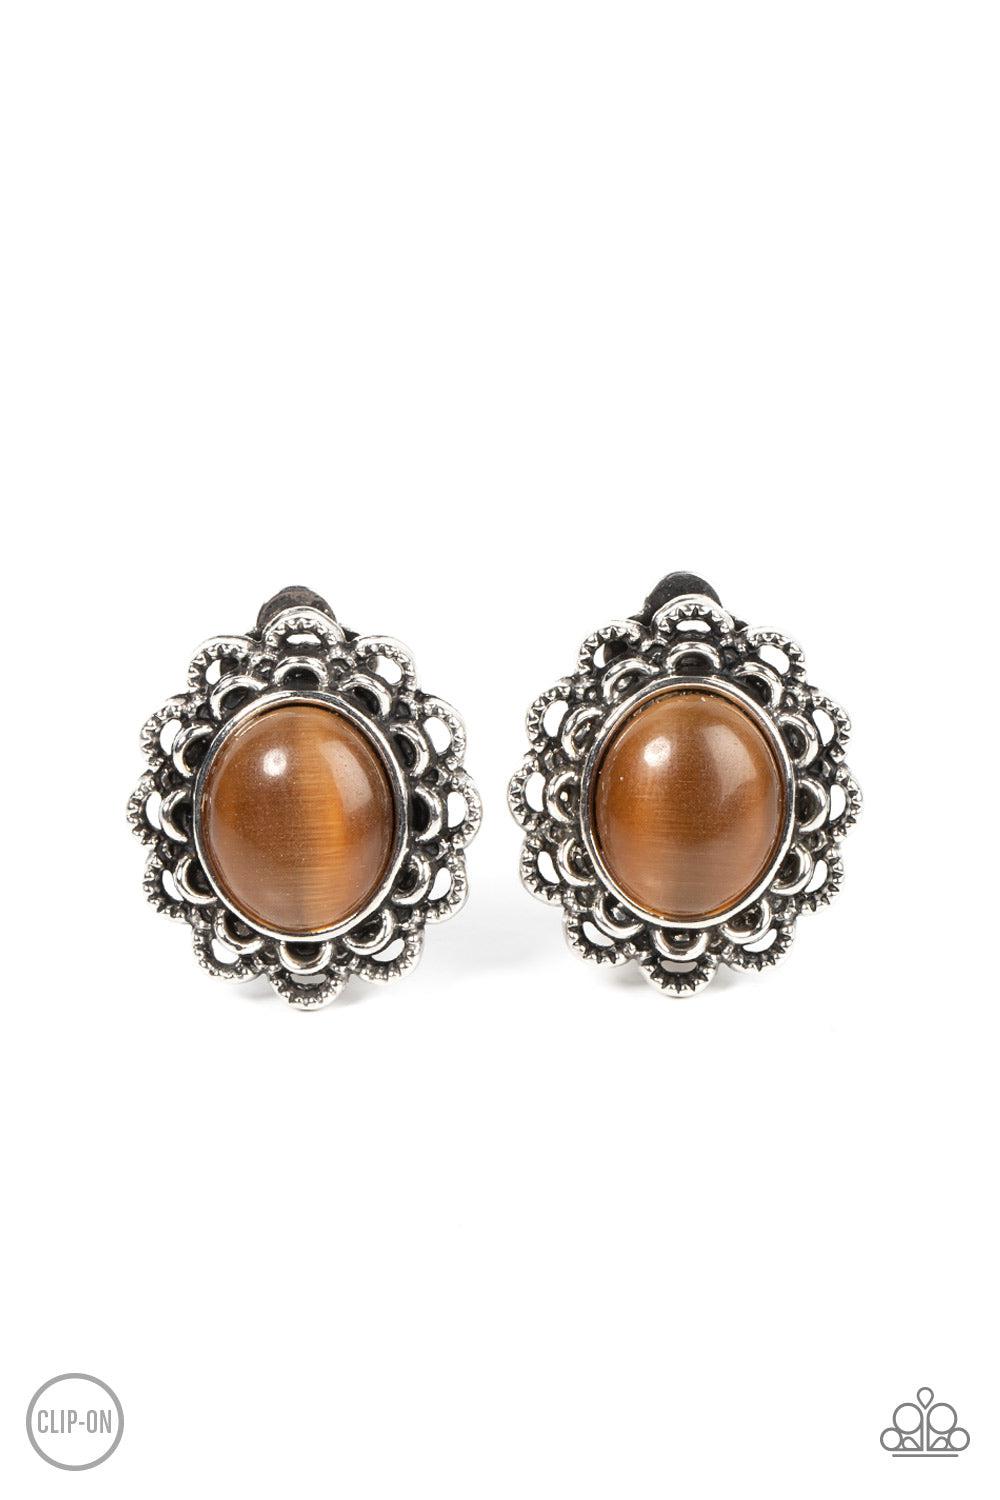 Garden Gazebo Brown Cat's Eye Stone Clip-on Earrings - Paparazzi Accessories- lightbox - CarasShop.com - $5 Jewelry by Cara Jewels